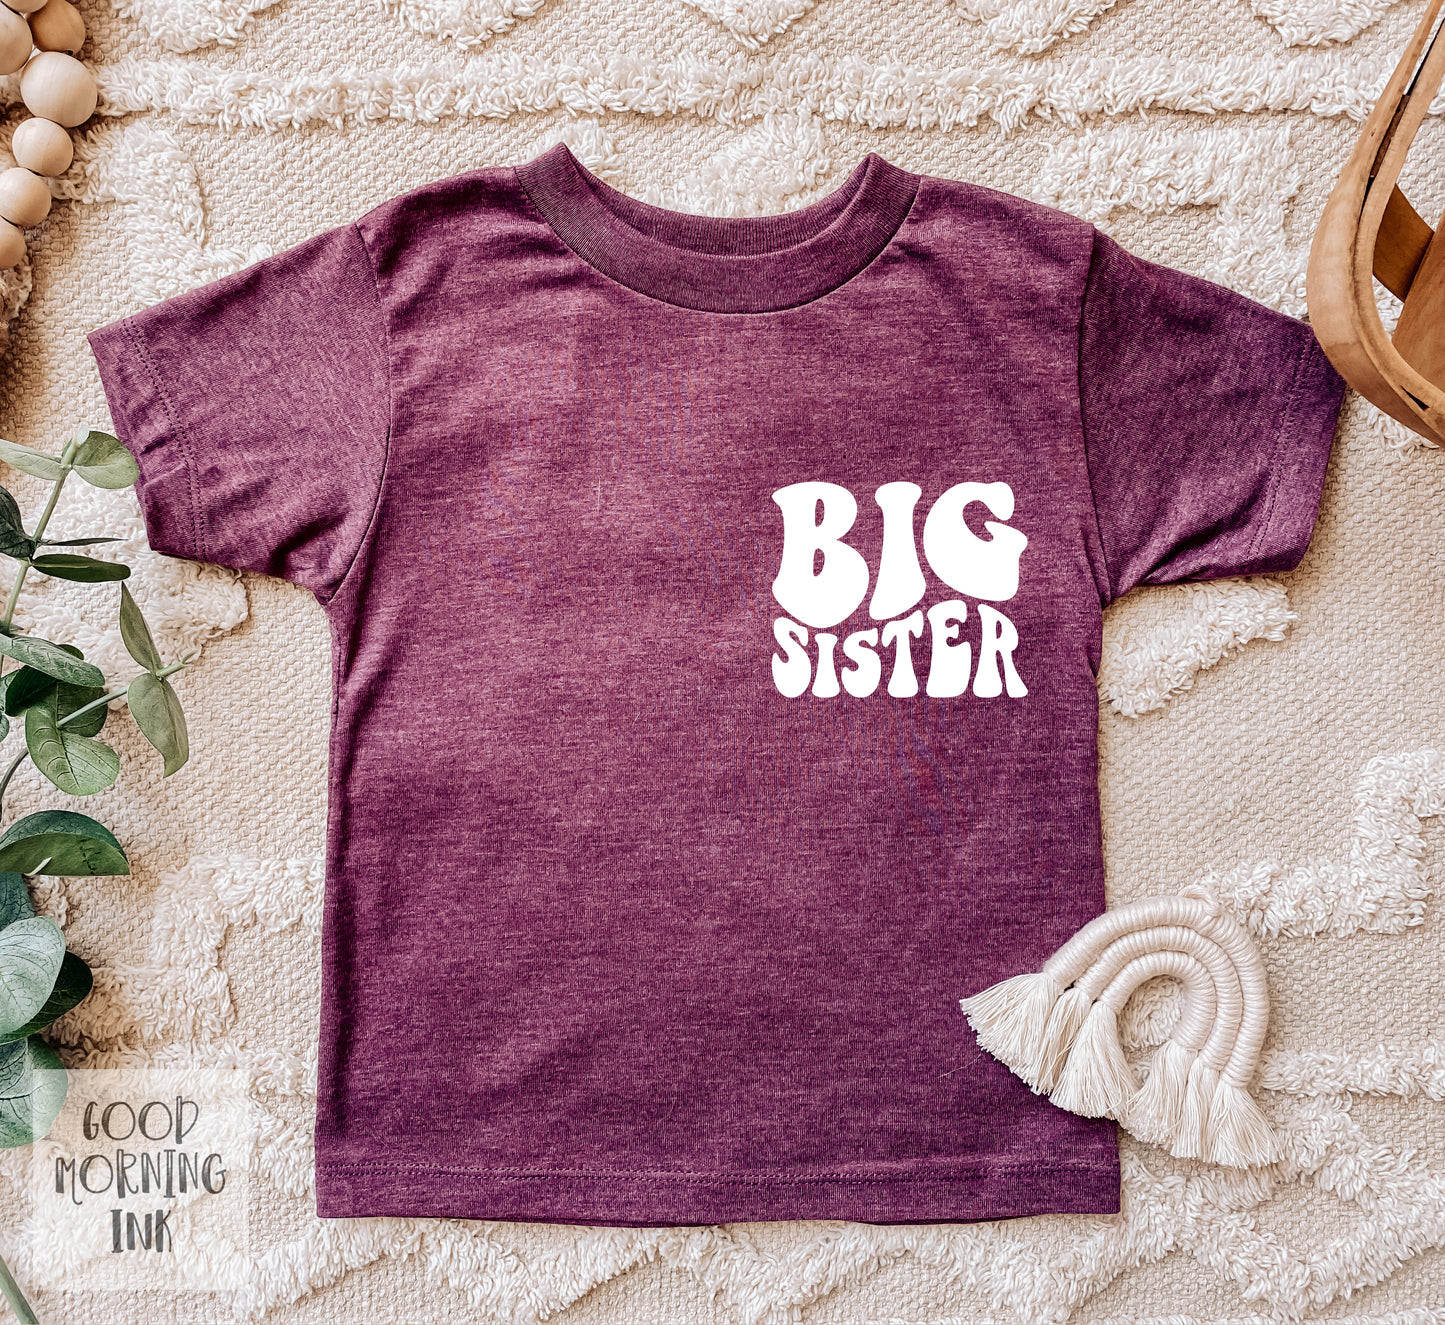 Pocket Print (Toddler/ Youth): Big Sister (WHITE)